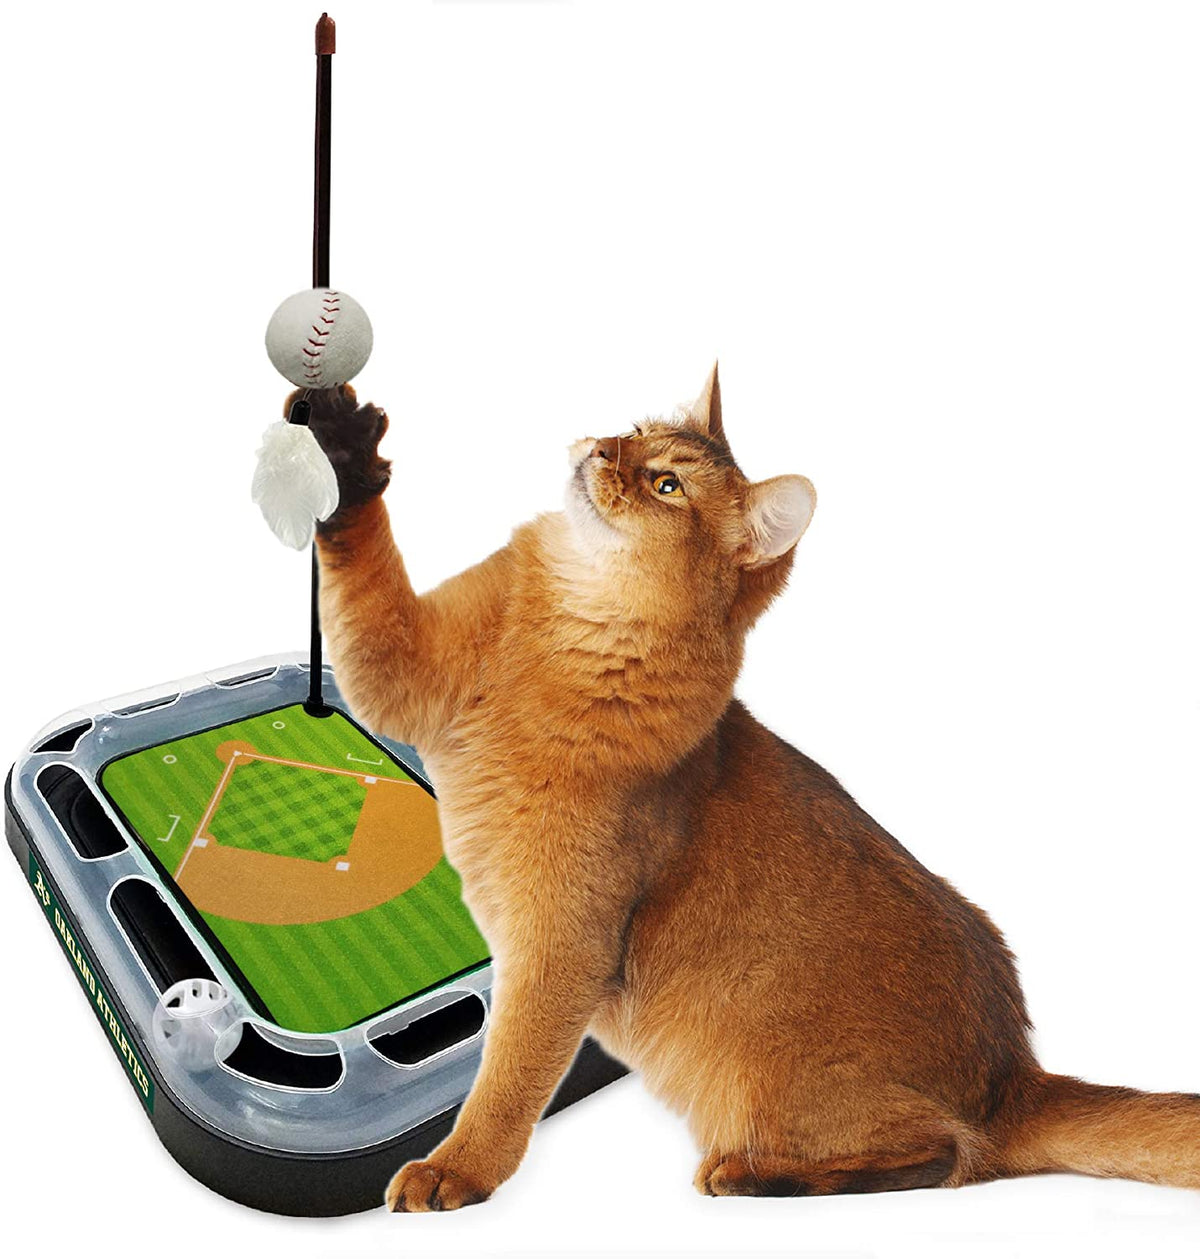 Oakland Athletics Baseball Cat Scratcher Toy